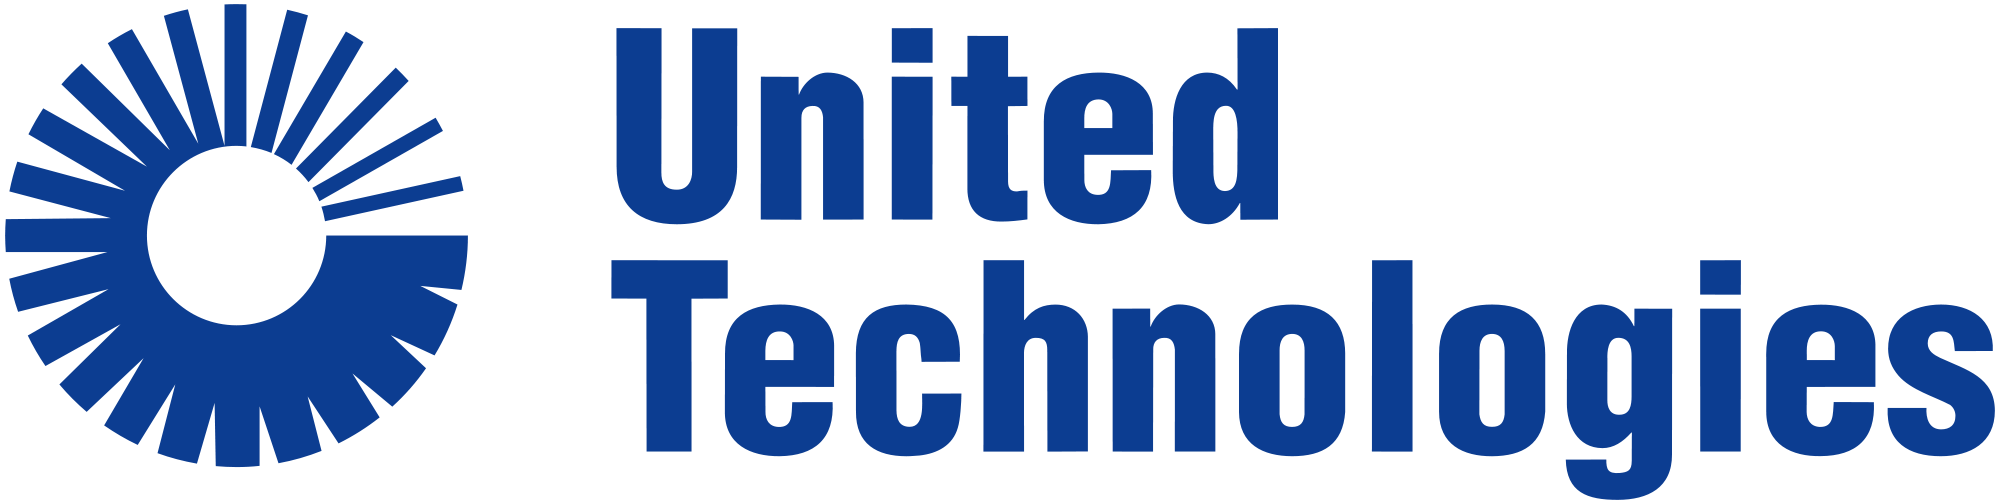 United Technologies Logo 02